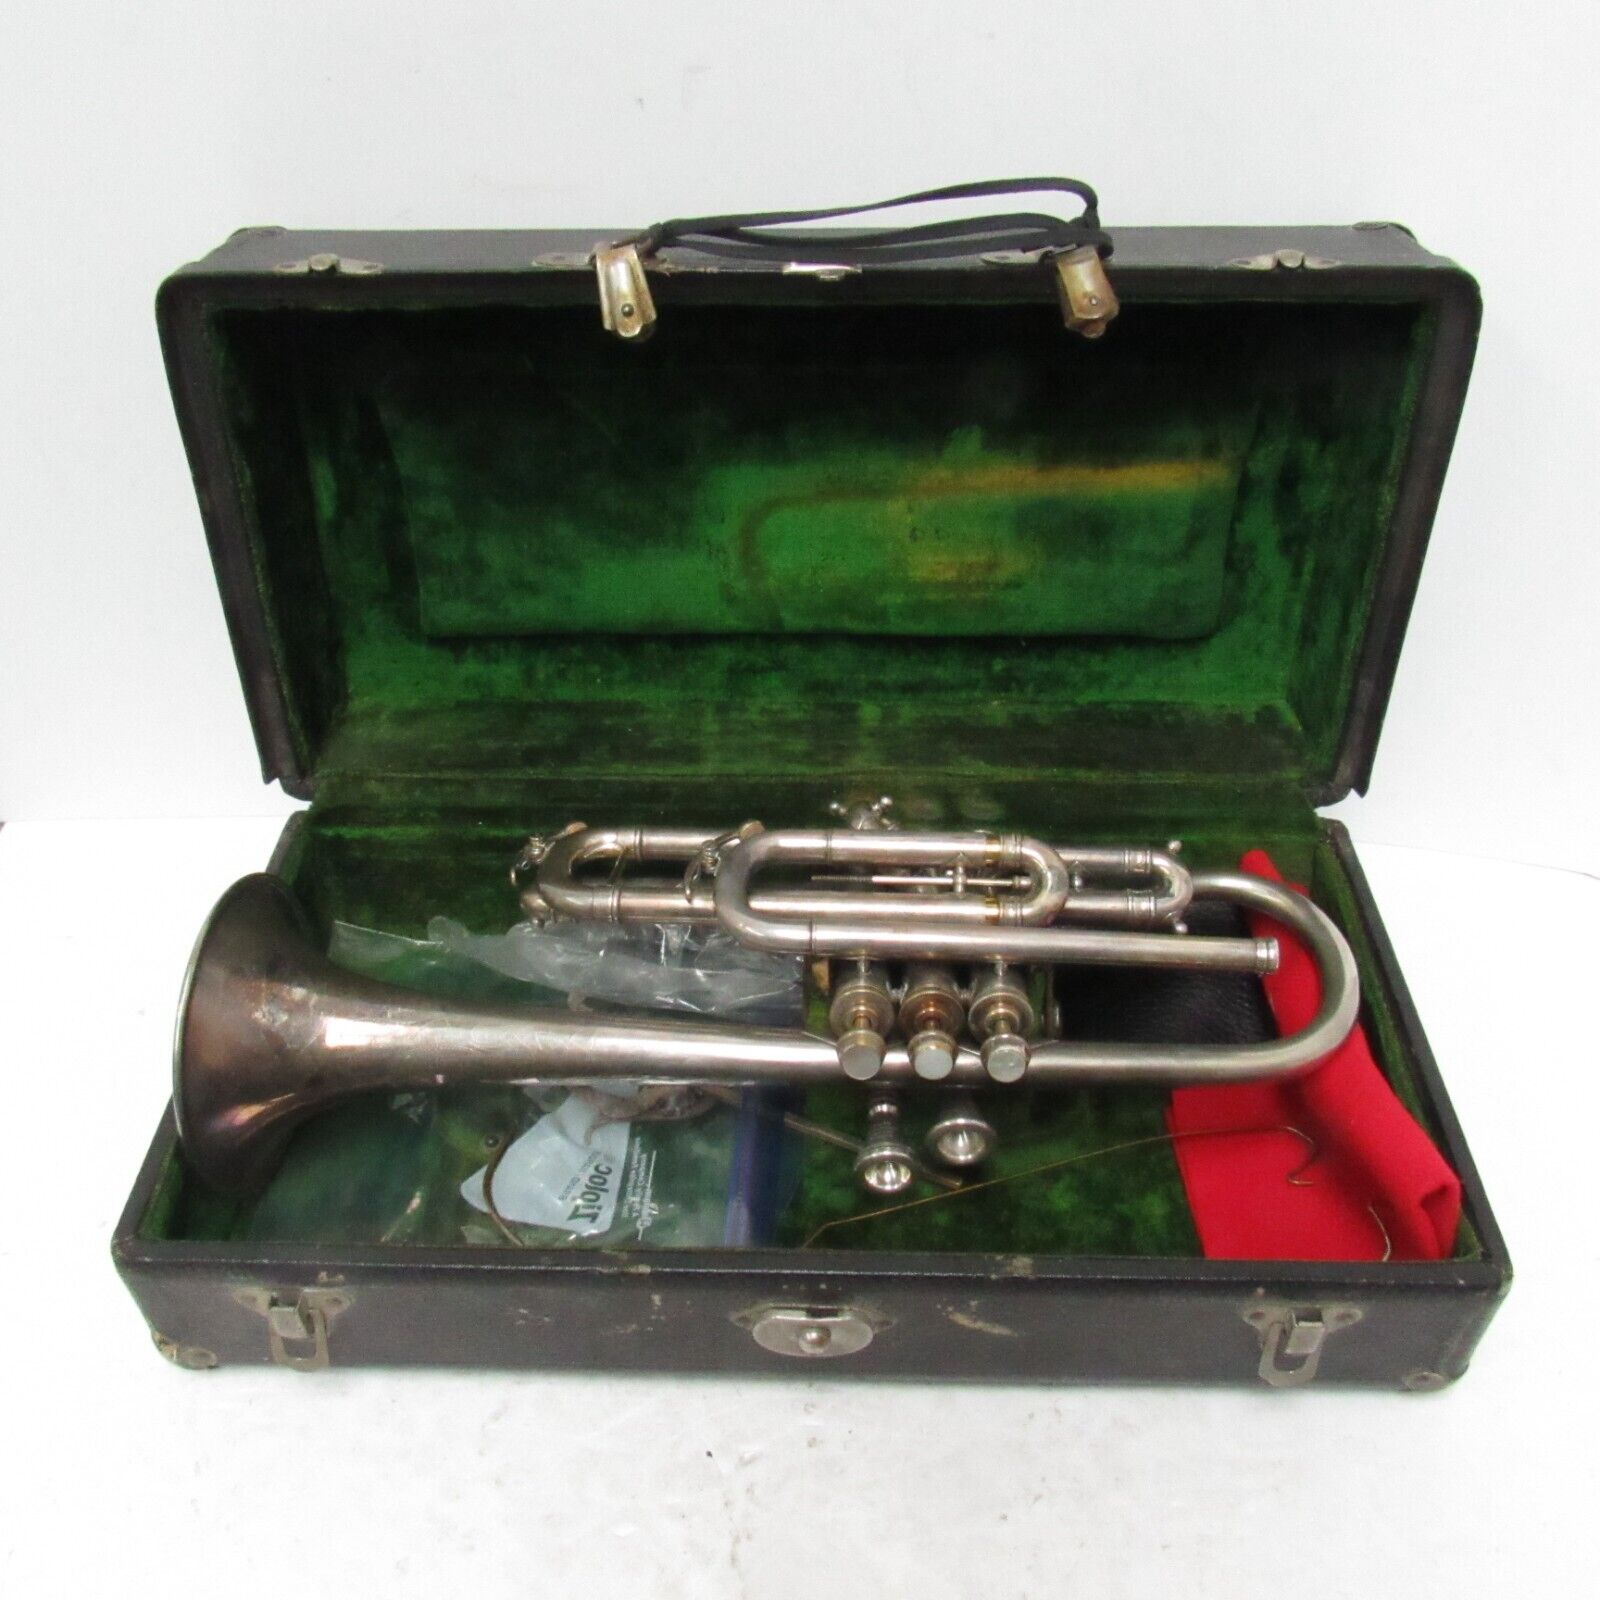 Vintage Antique JW York & Sons Cornet Trumpet With Original Case #65440